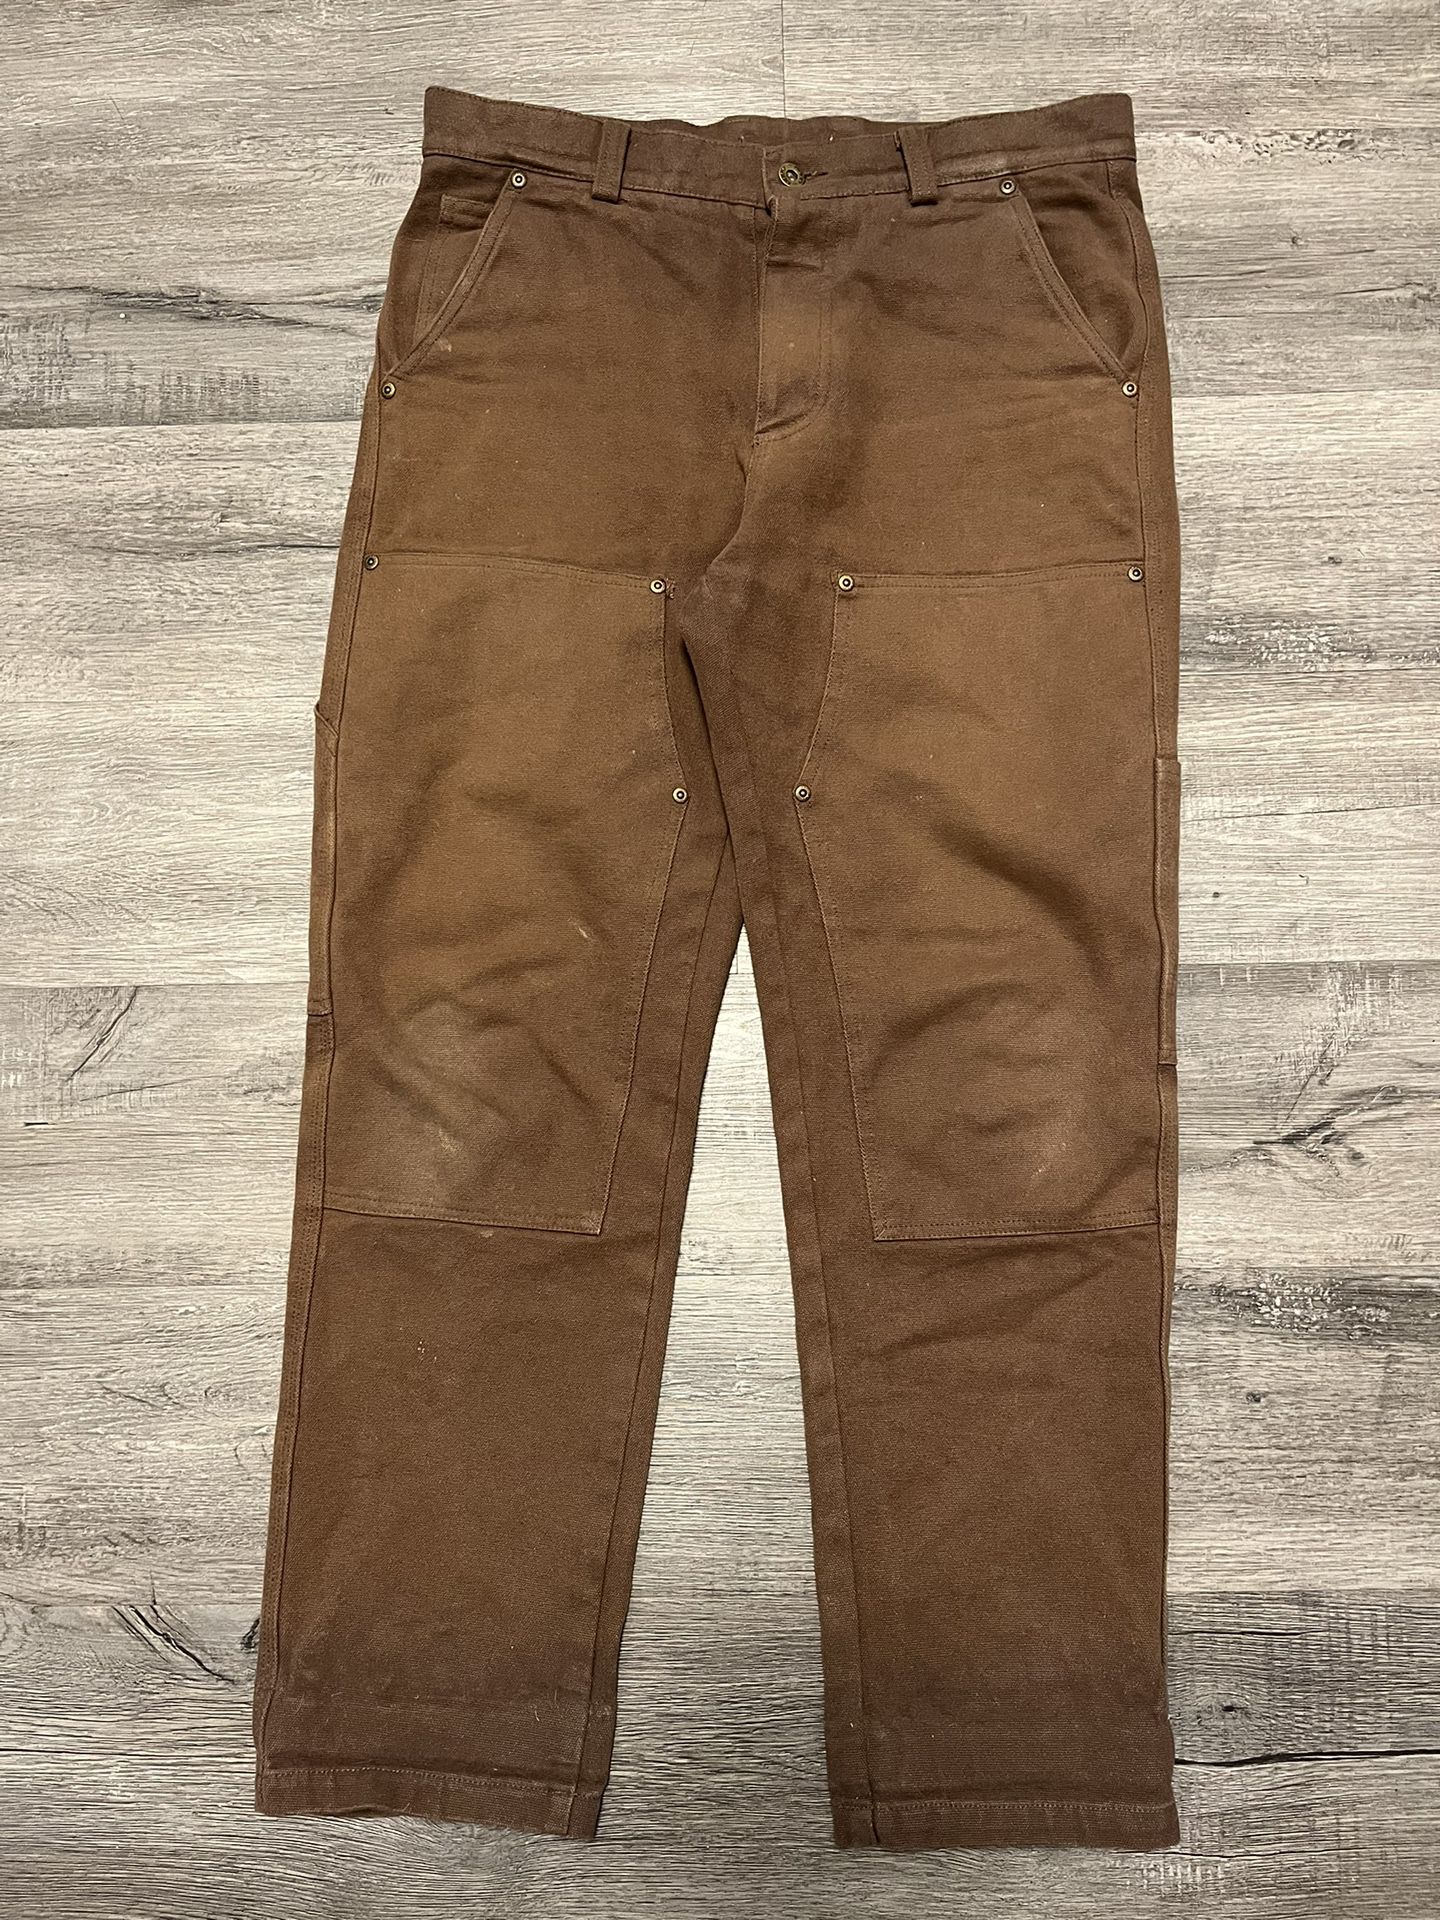 US Men’s 32 x 32 Brown Duck Double Knee Work Pants Jeans - DISTRESSED Vintage